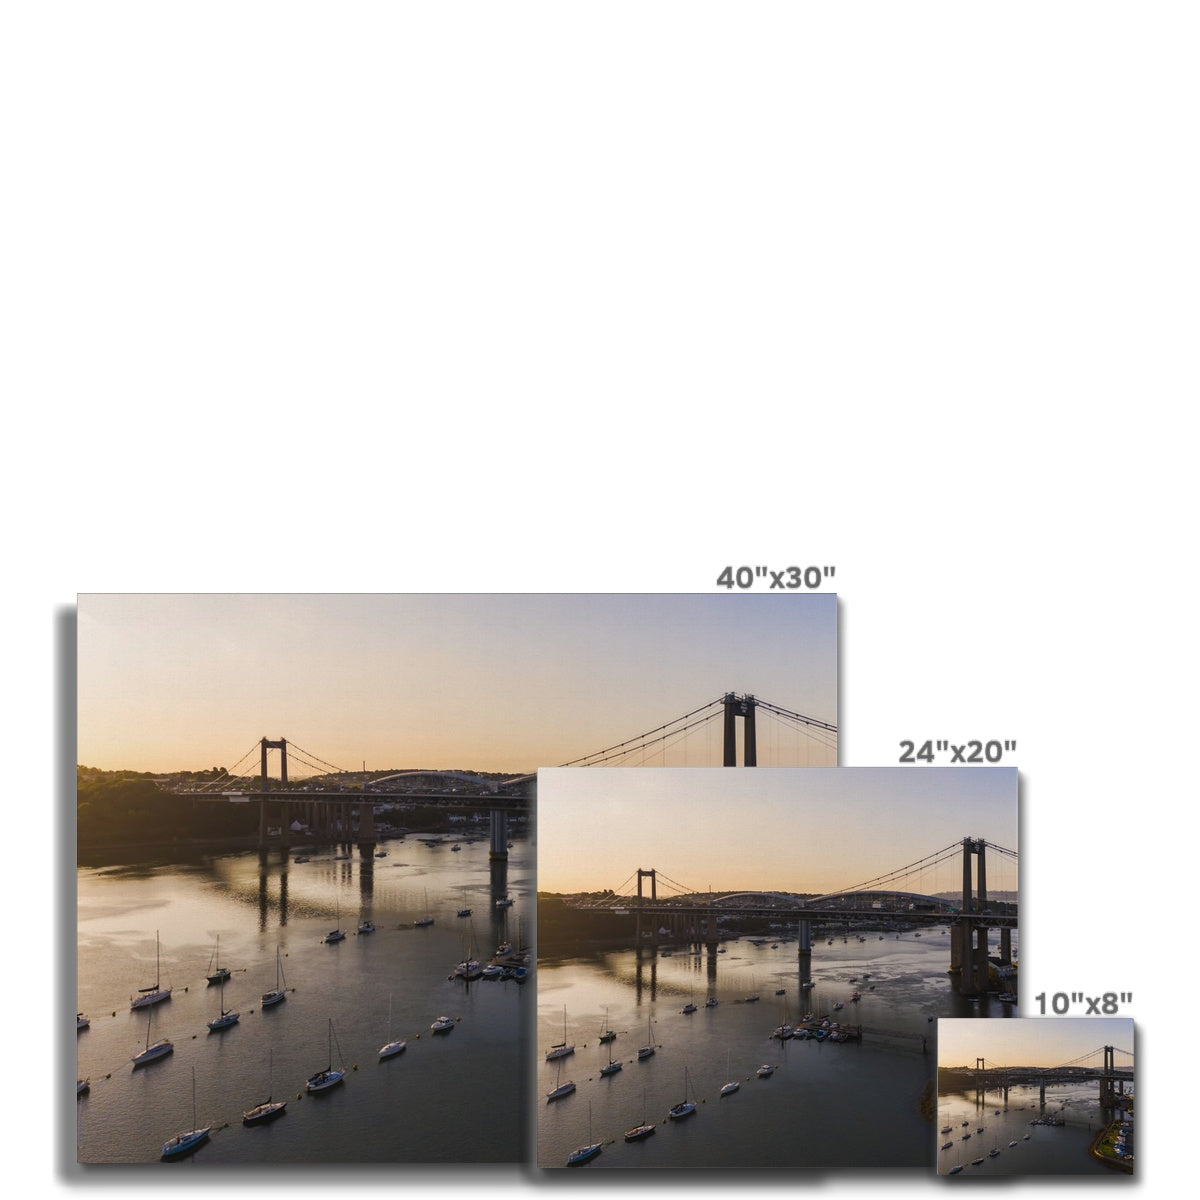 tamar bridge saltash canvas sizes